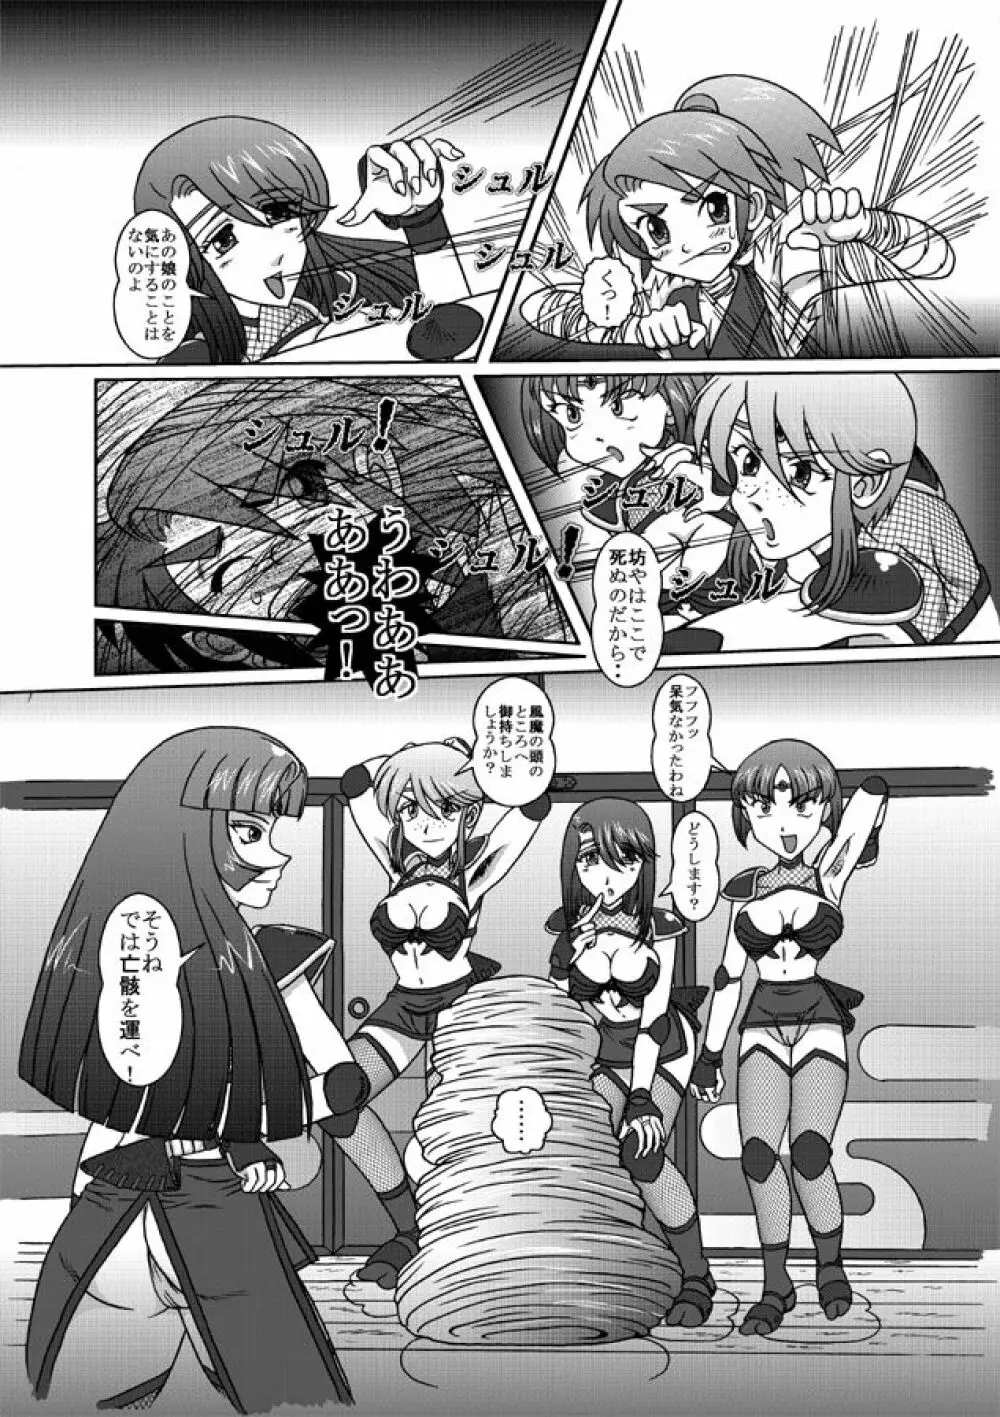 Same-themed manga about kid fighting female ninjas from japanese imageboard. 21ページ